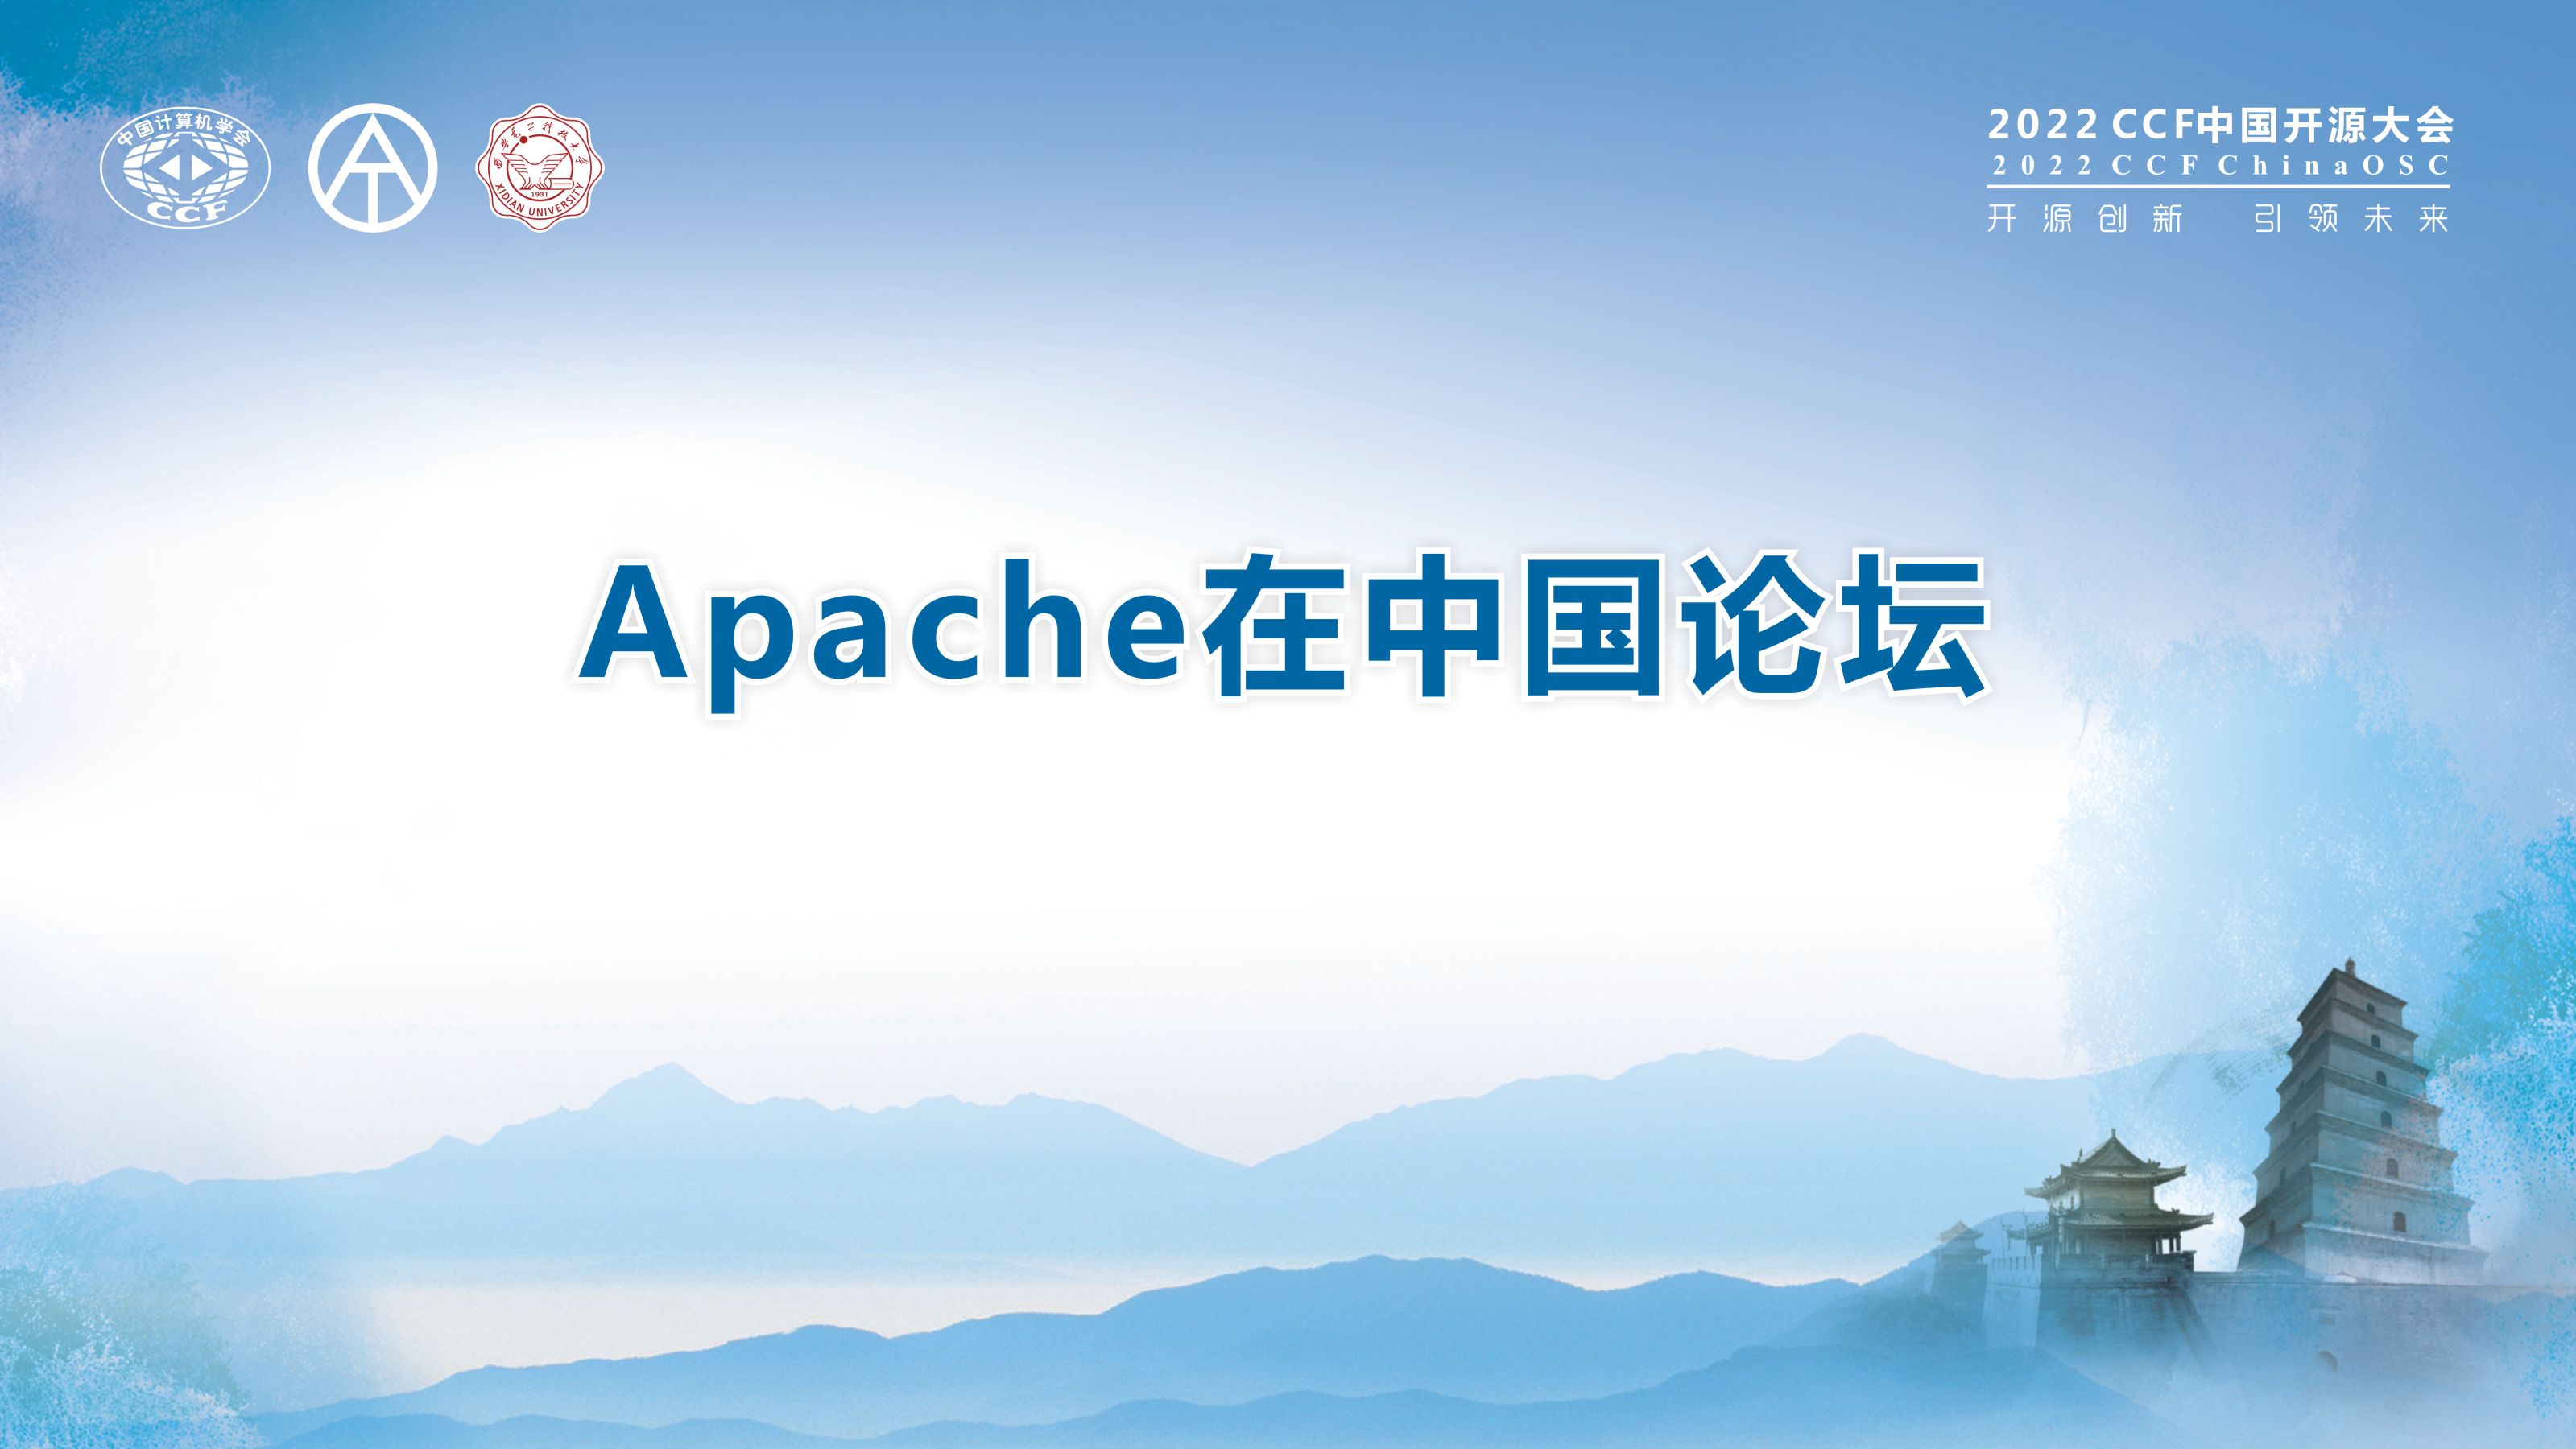 6.Apache在中国论坛.jpg